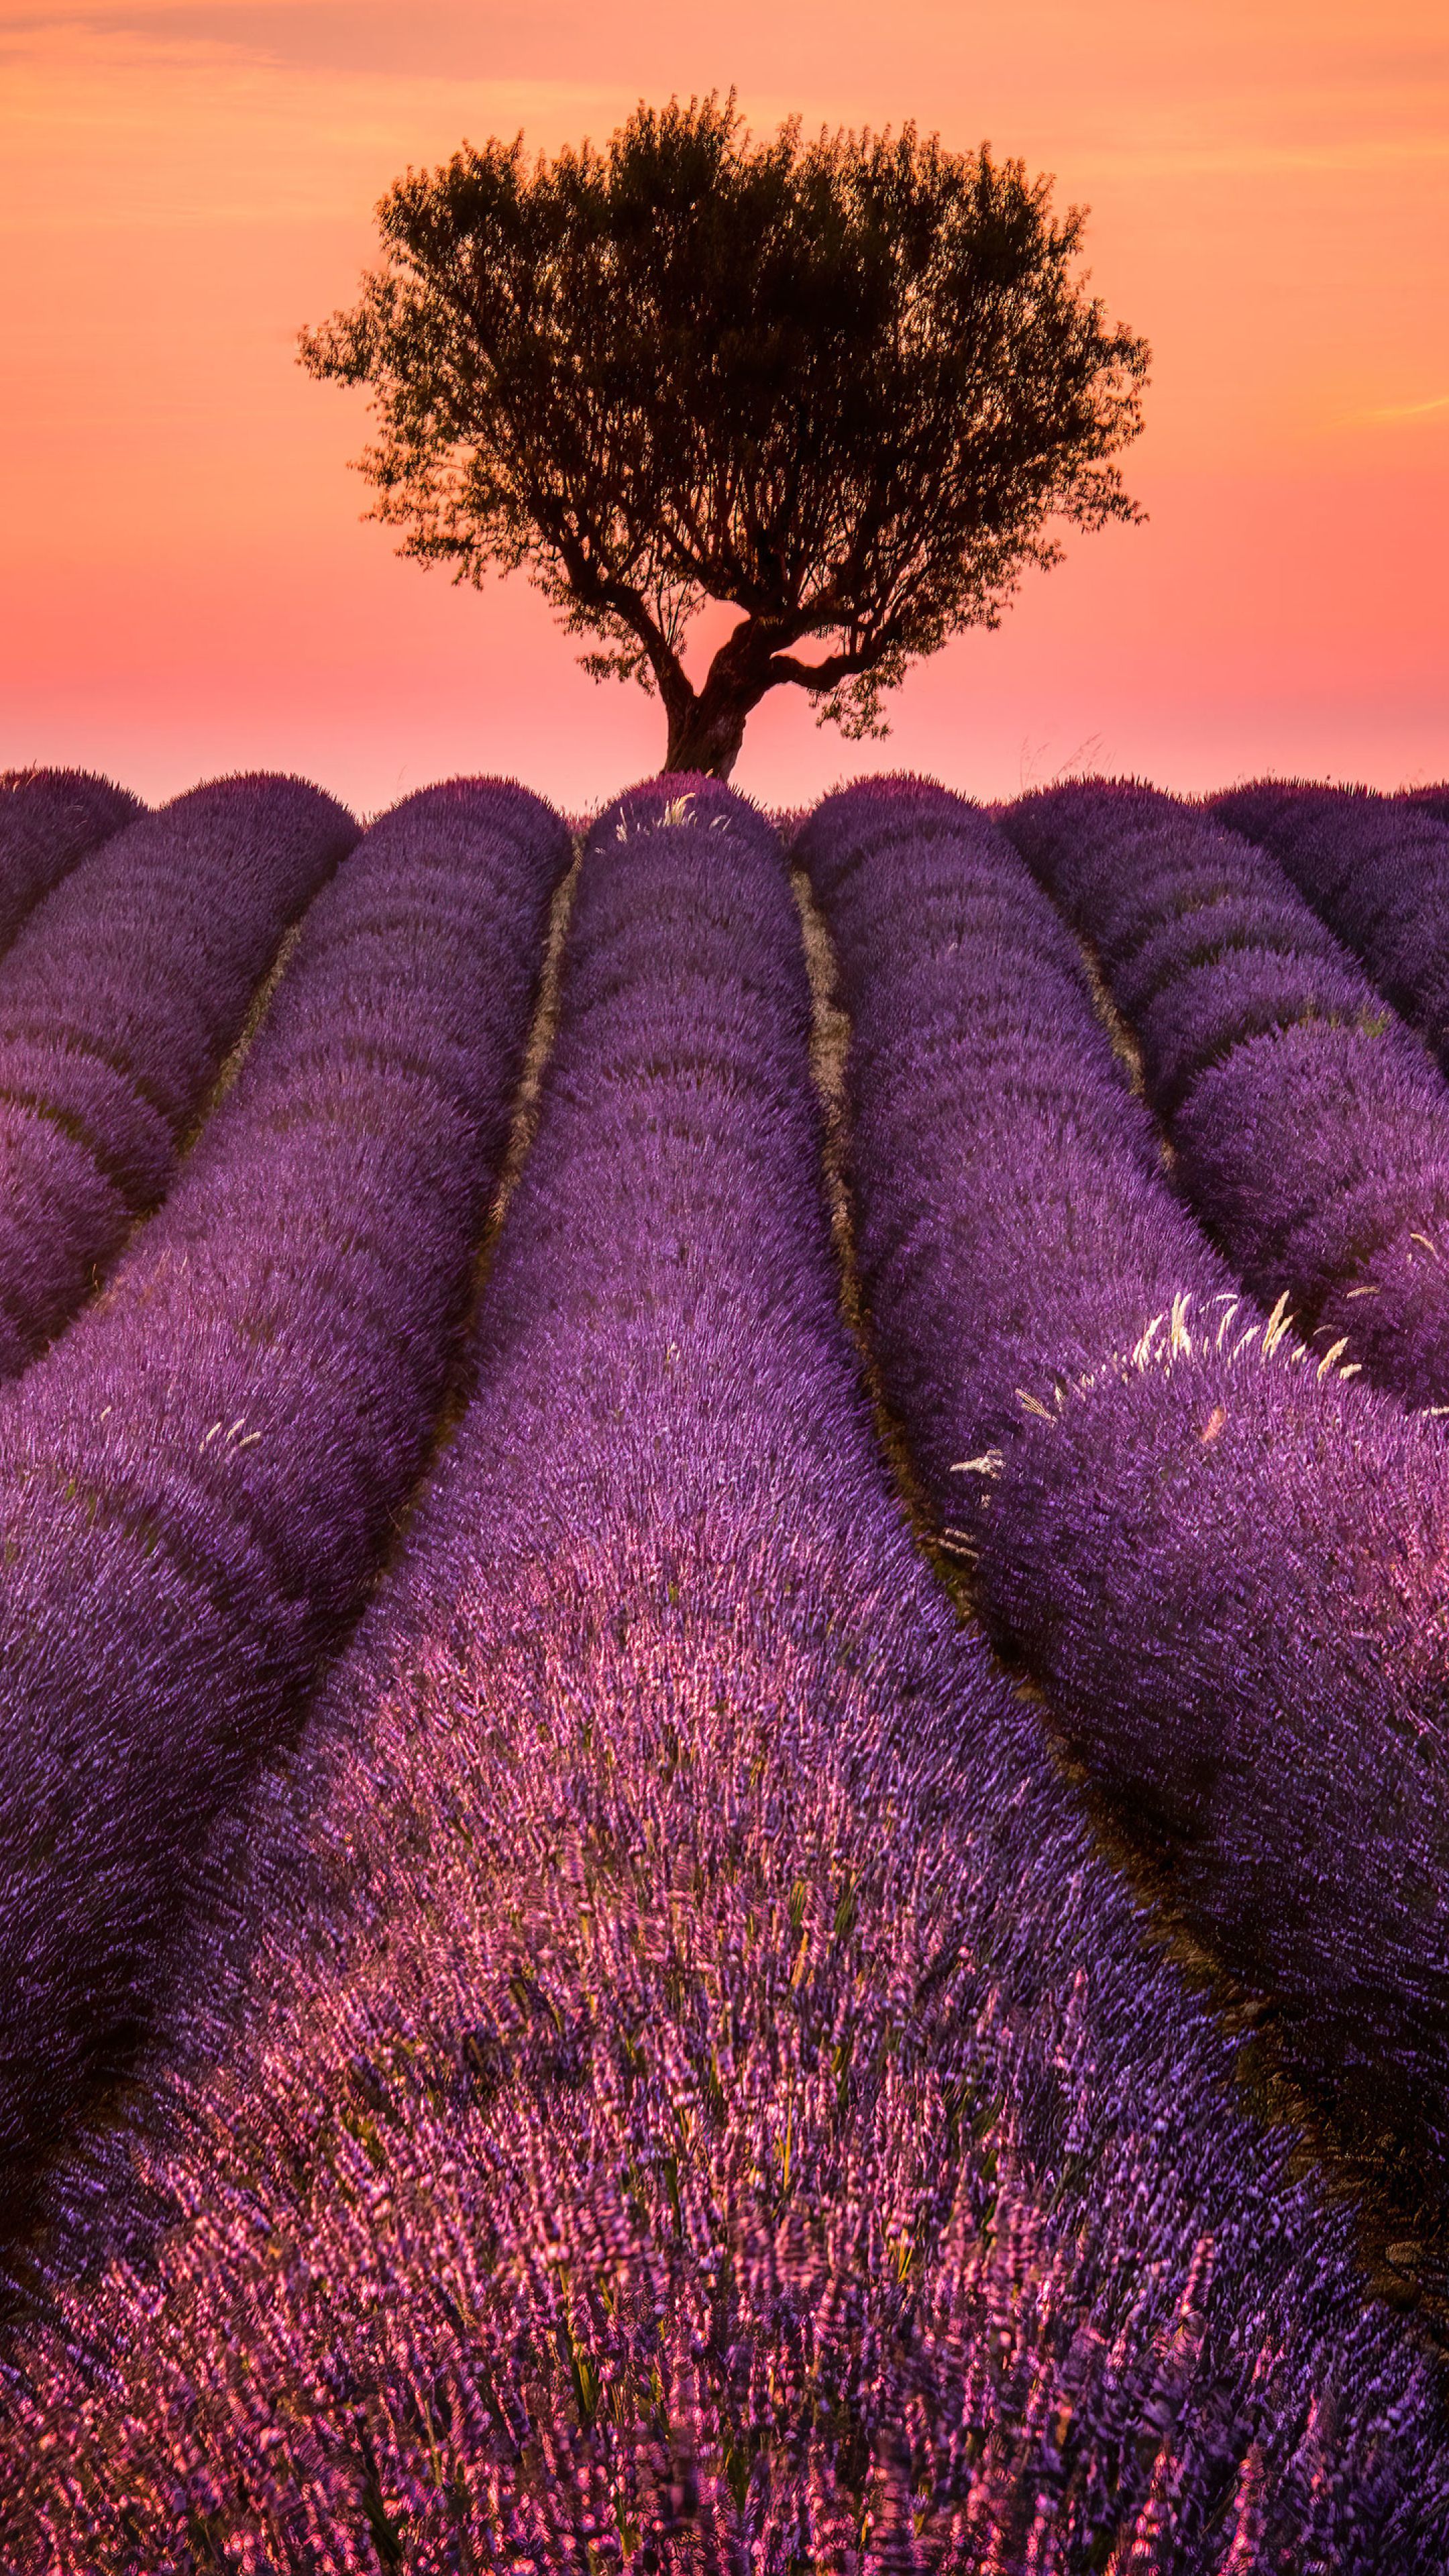 Lavender Field Sony Xperia X, XZ, Z5 Premium Wallpaper, HD Nature 4K Wallpaper, Image, Photo and Background